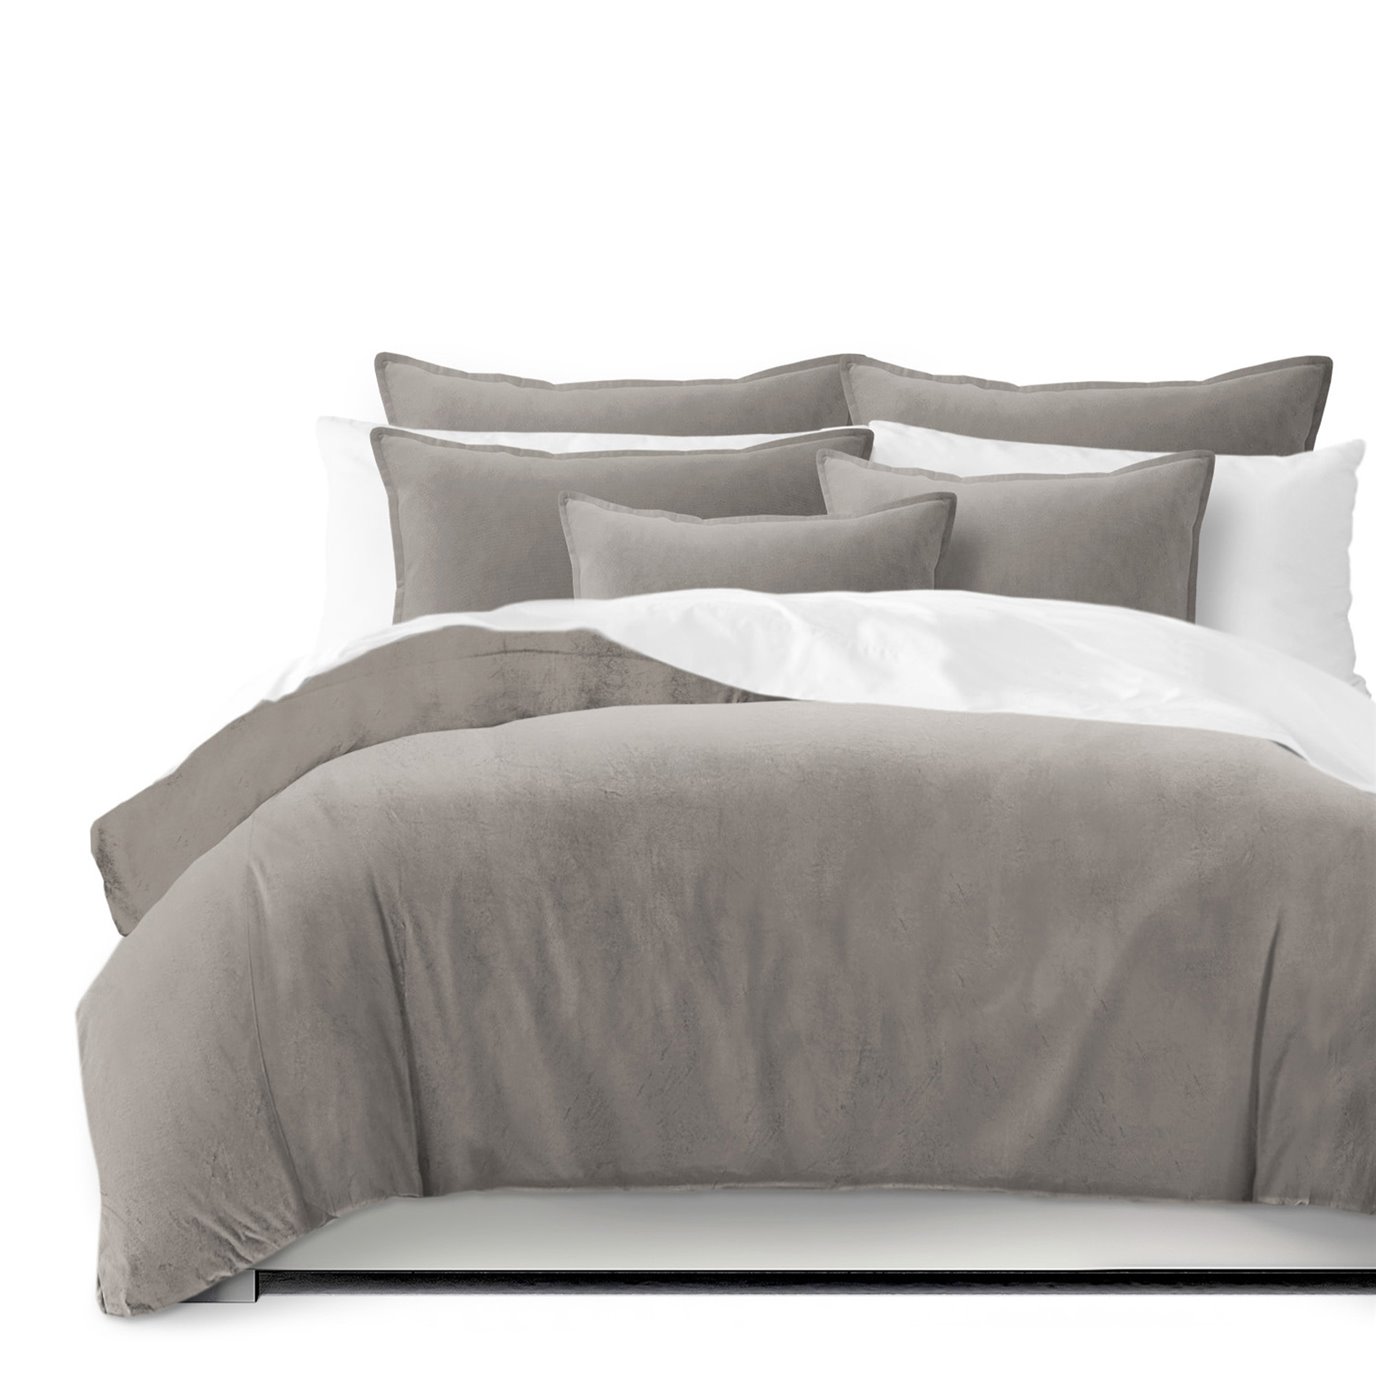 Vanessa Greige Comforter and Pillow Sham(s) Set - Size King / California King